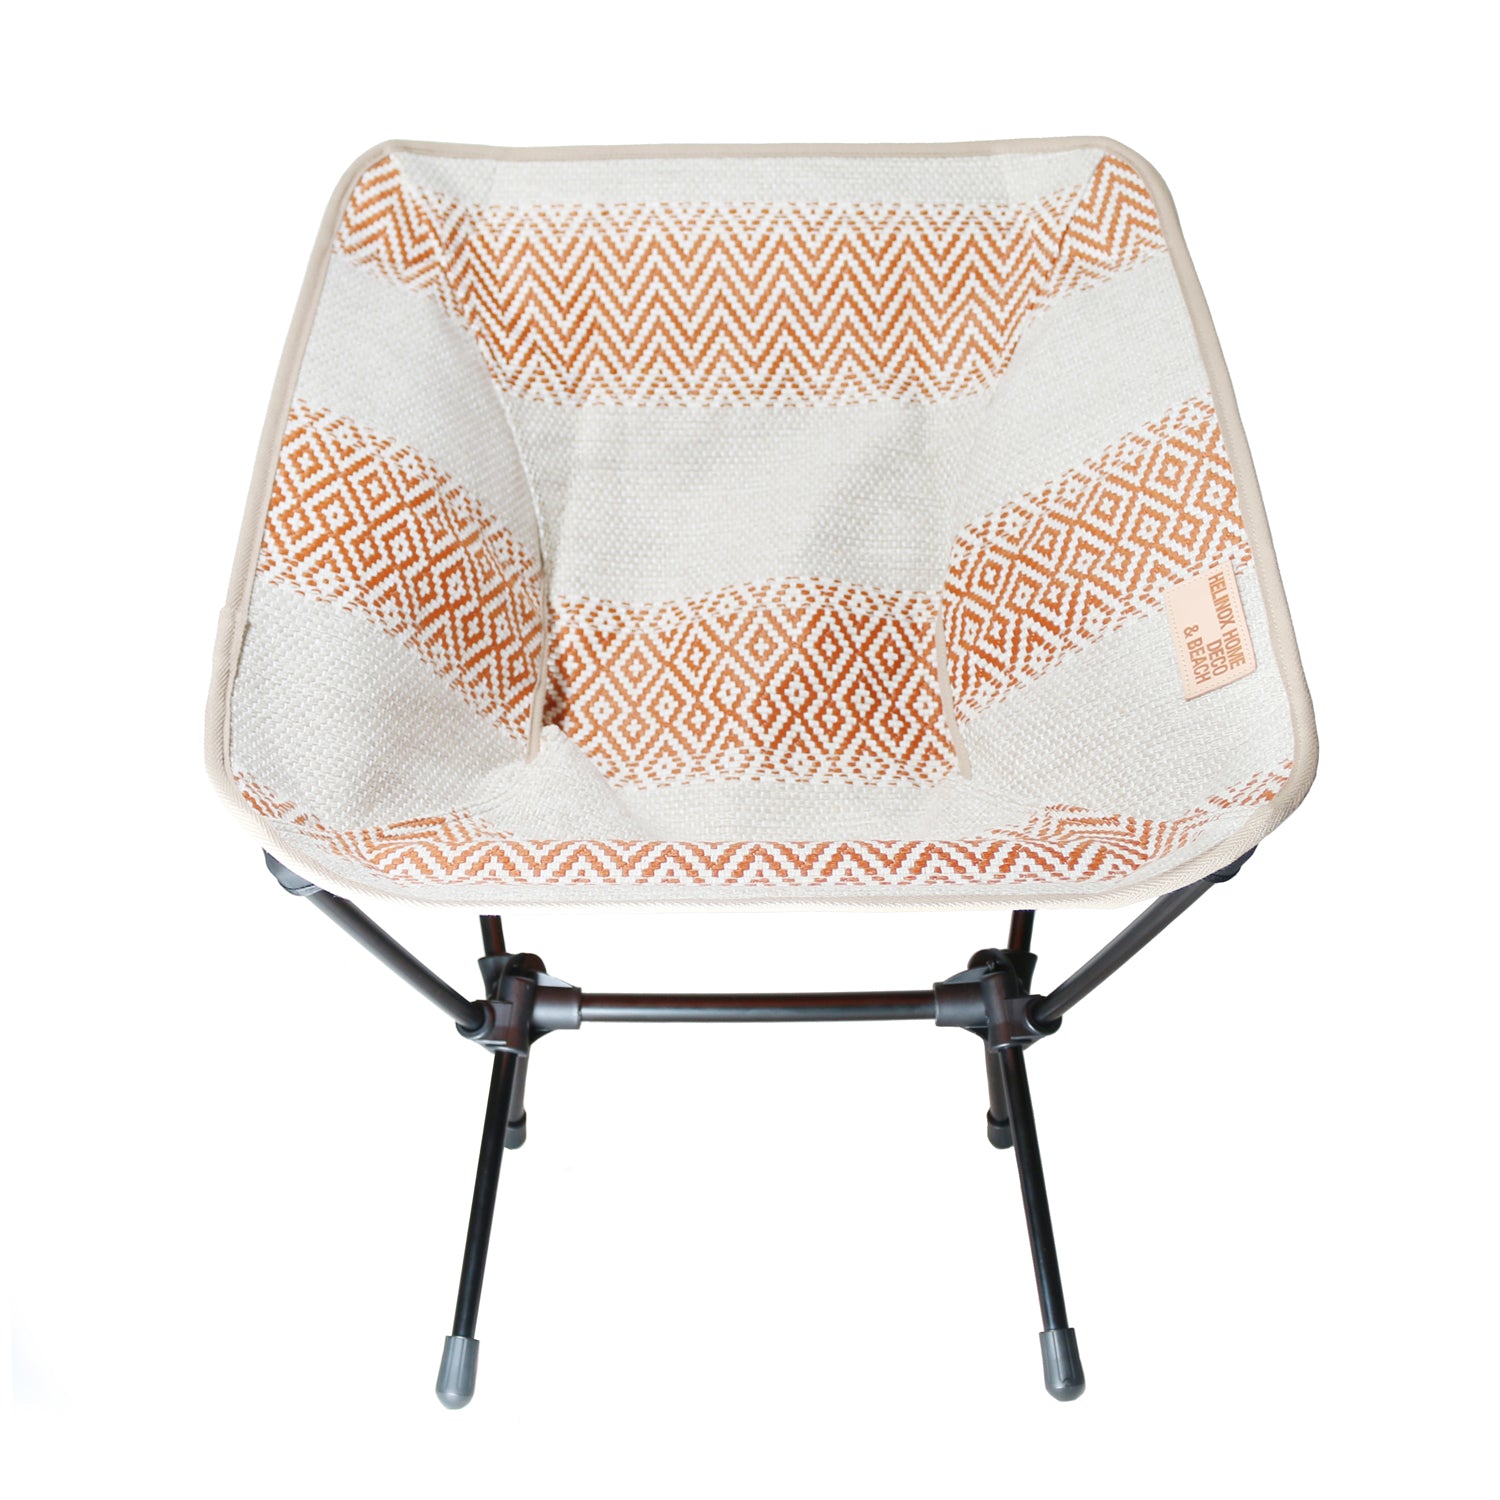 CUB0111 Helinox comfort chair